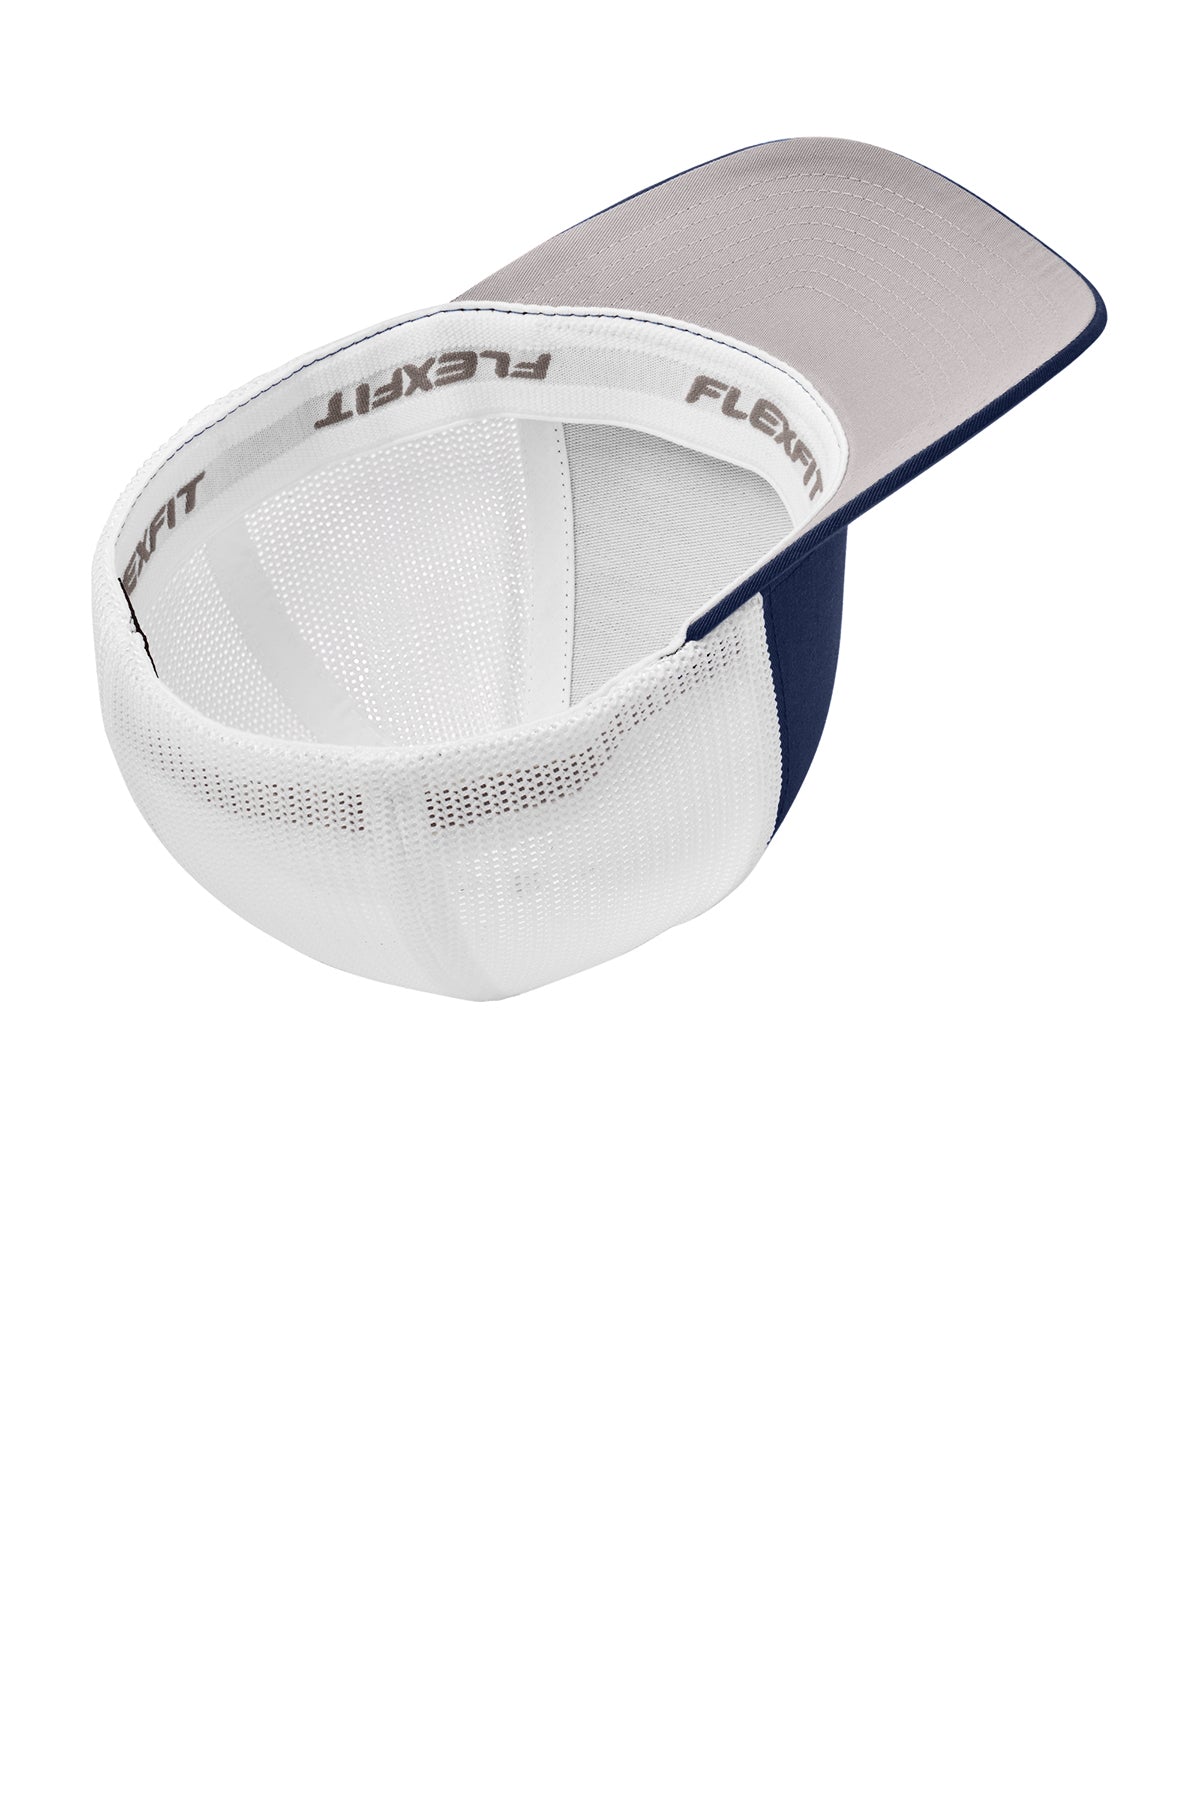 Port Authority Flexfit Mesh Back Branded Caps, True Navy/ White